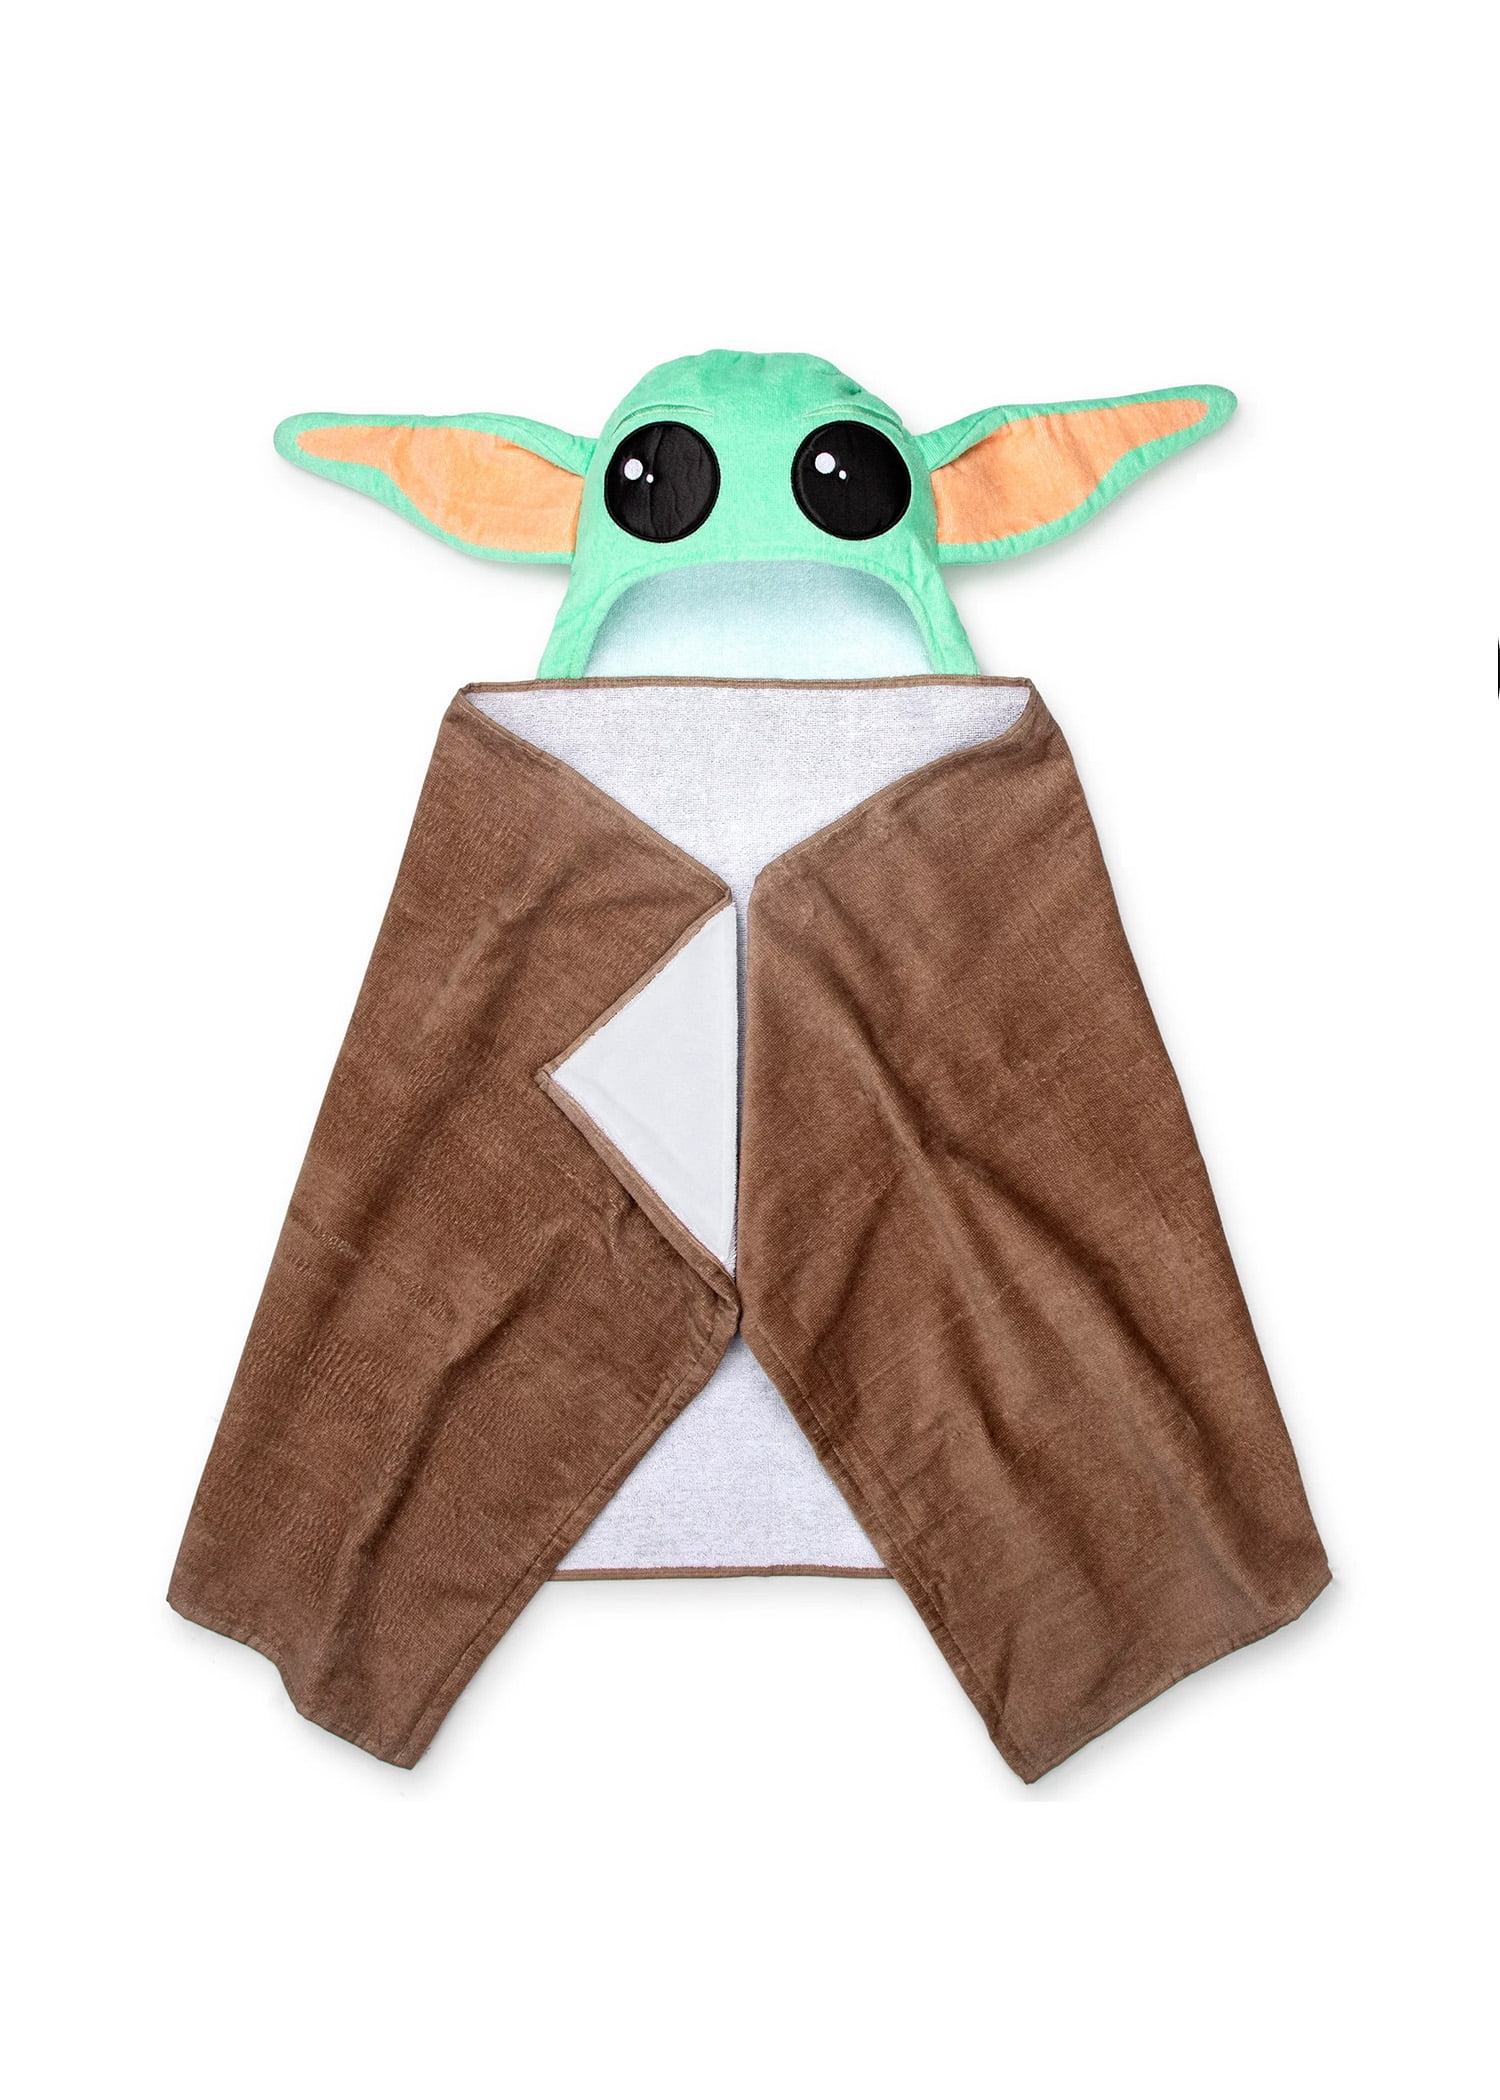 Baby Yoda Kids Hooded Towel Wrap, 51 x 22, 100% Cotton, Green, Star Wars